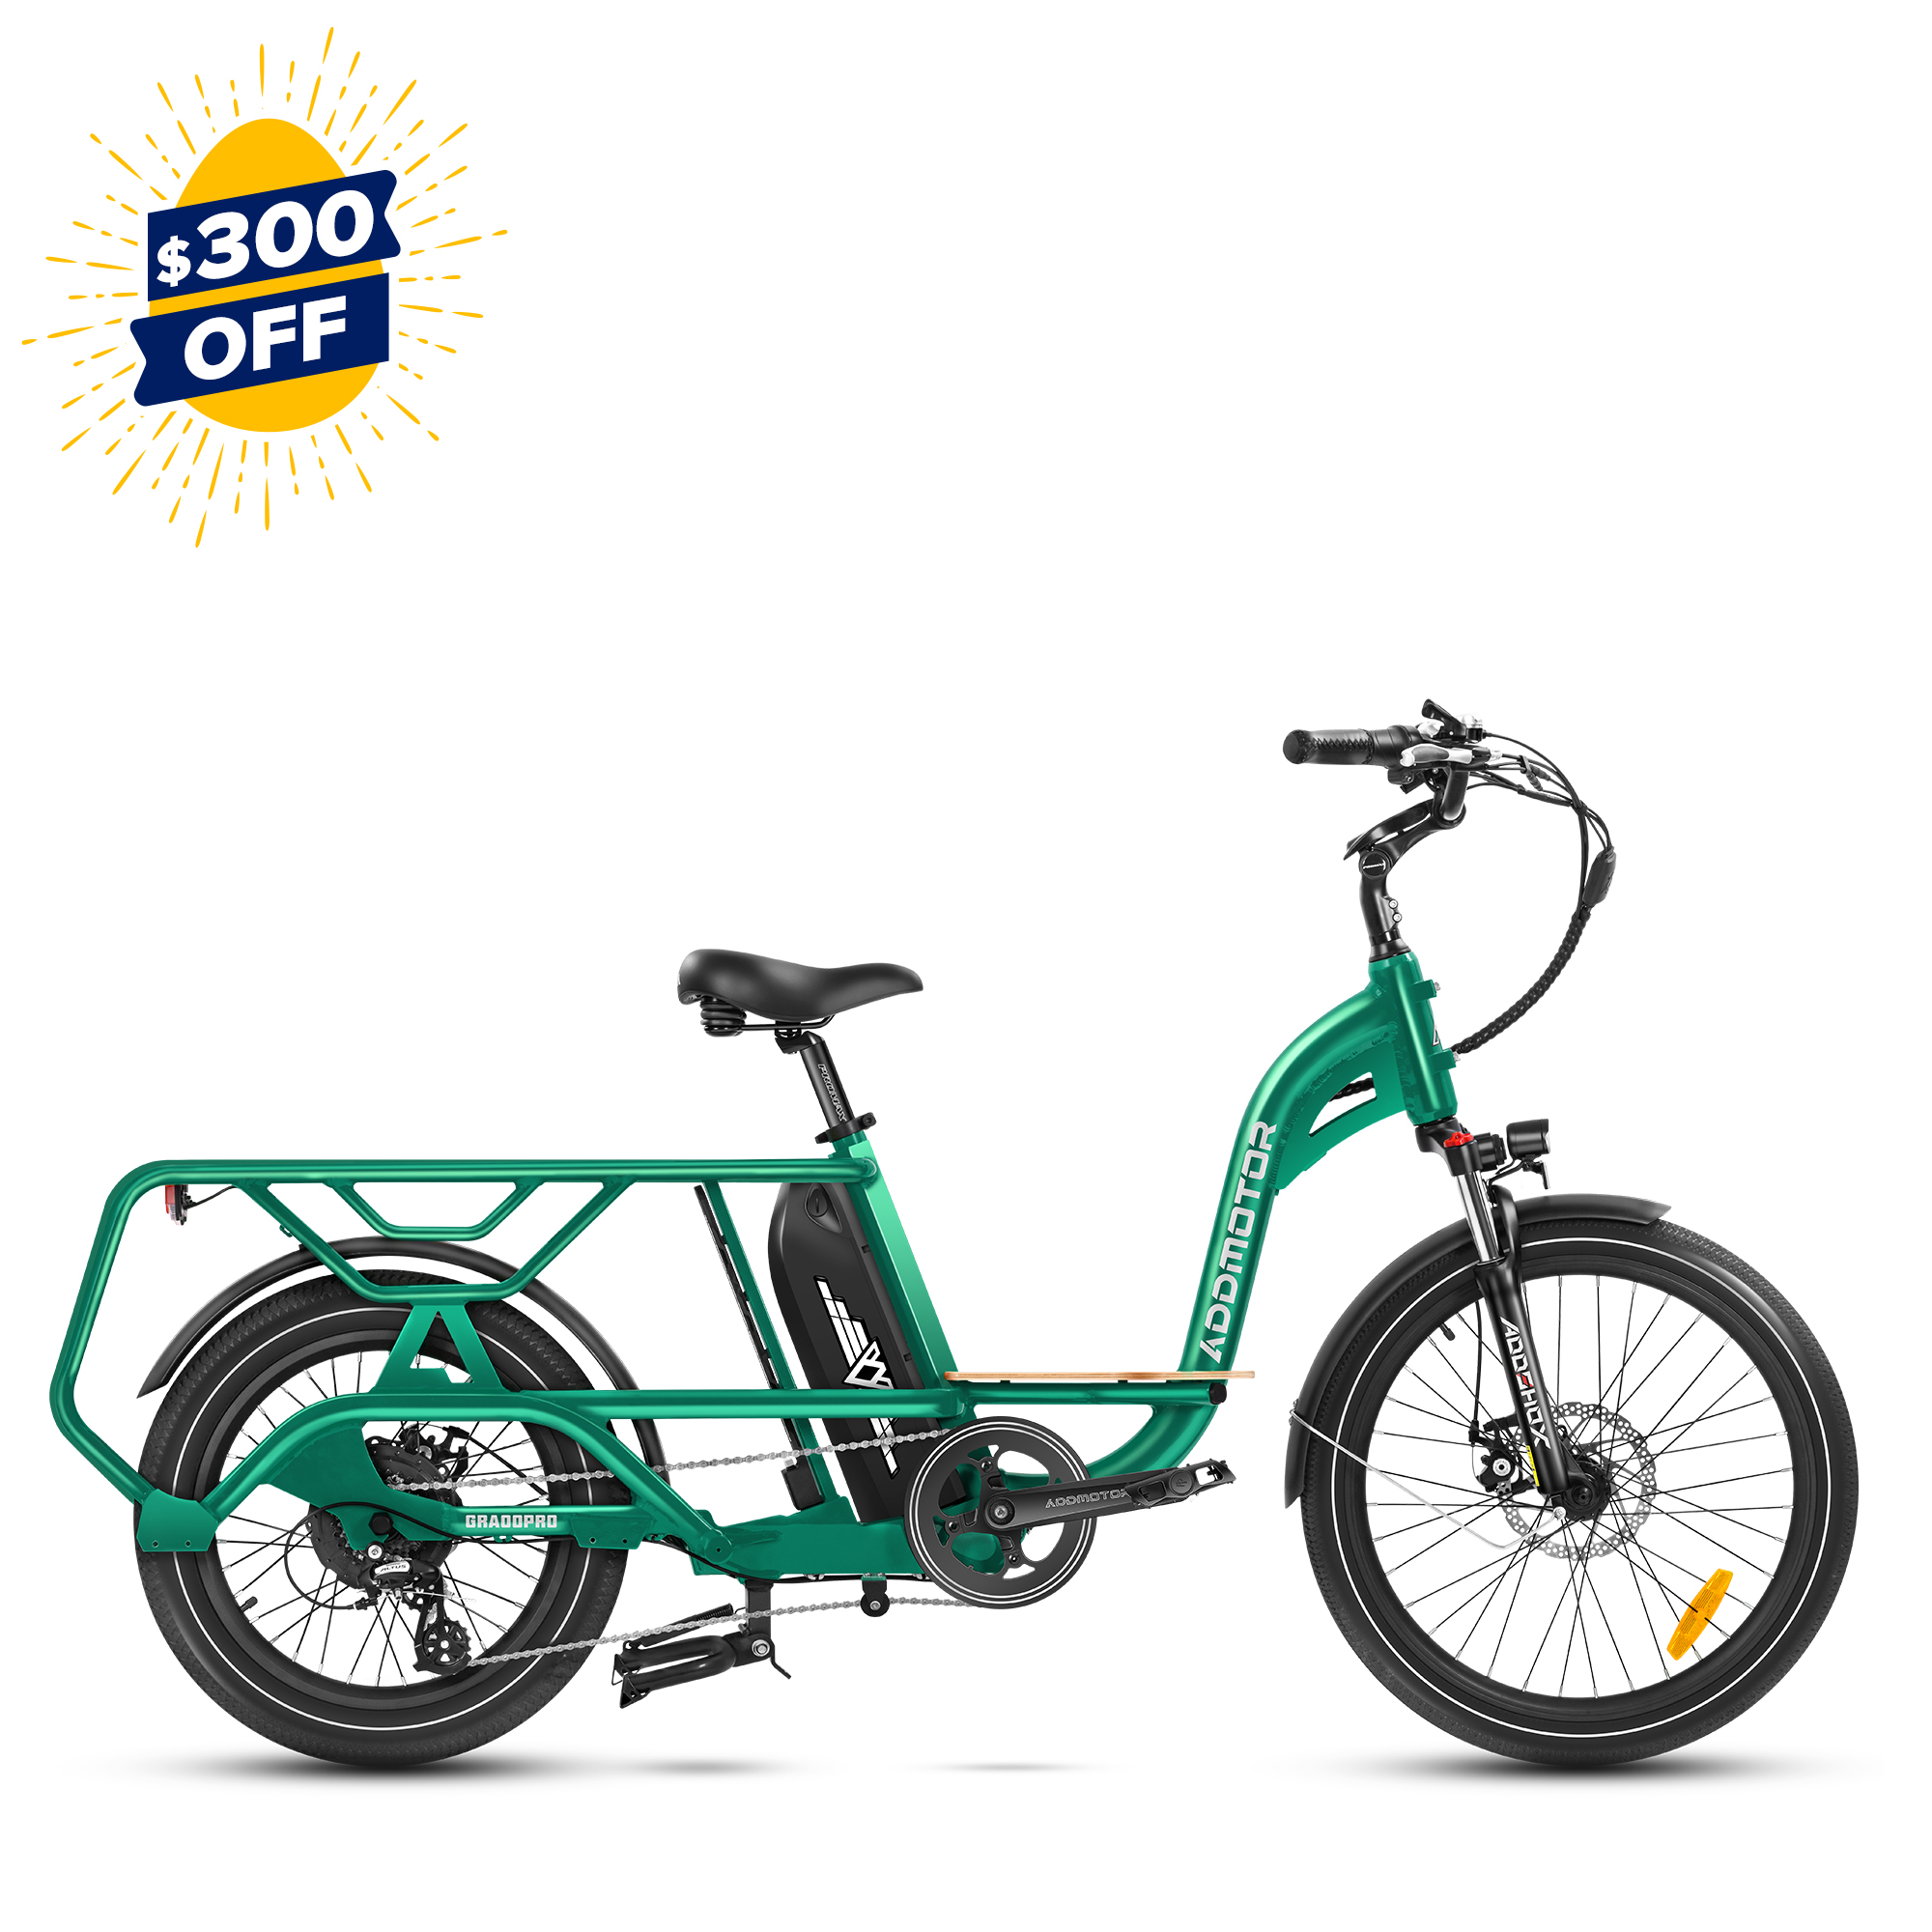 extra $300 off graoopro cargo electric bike